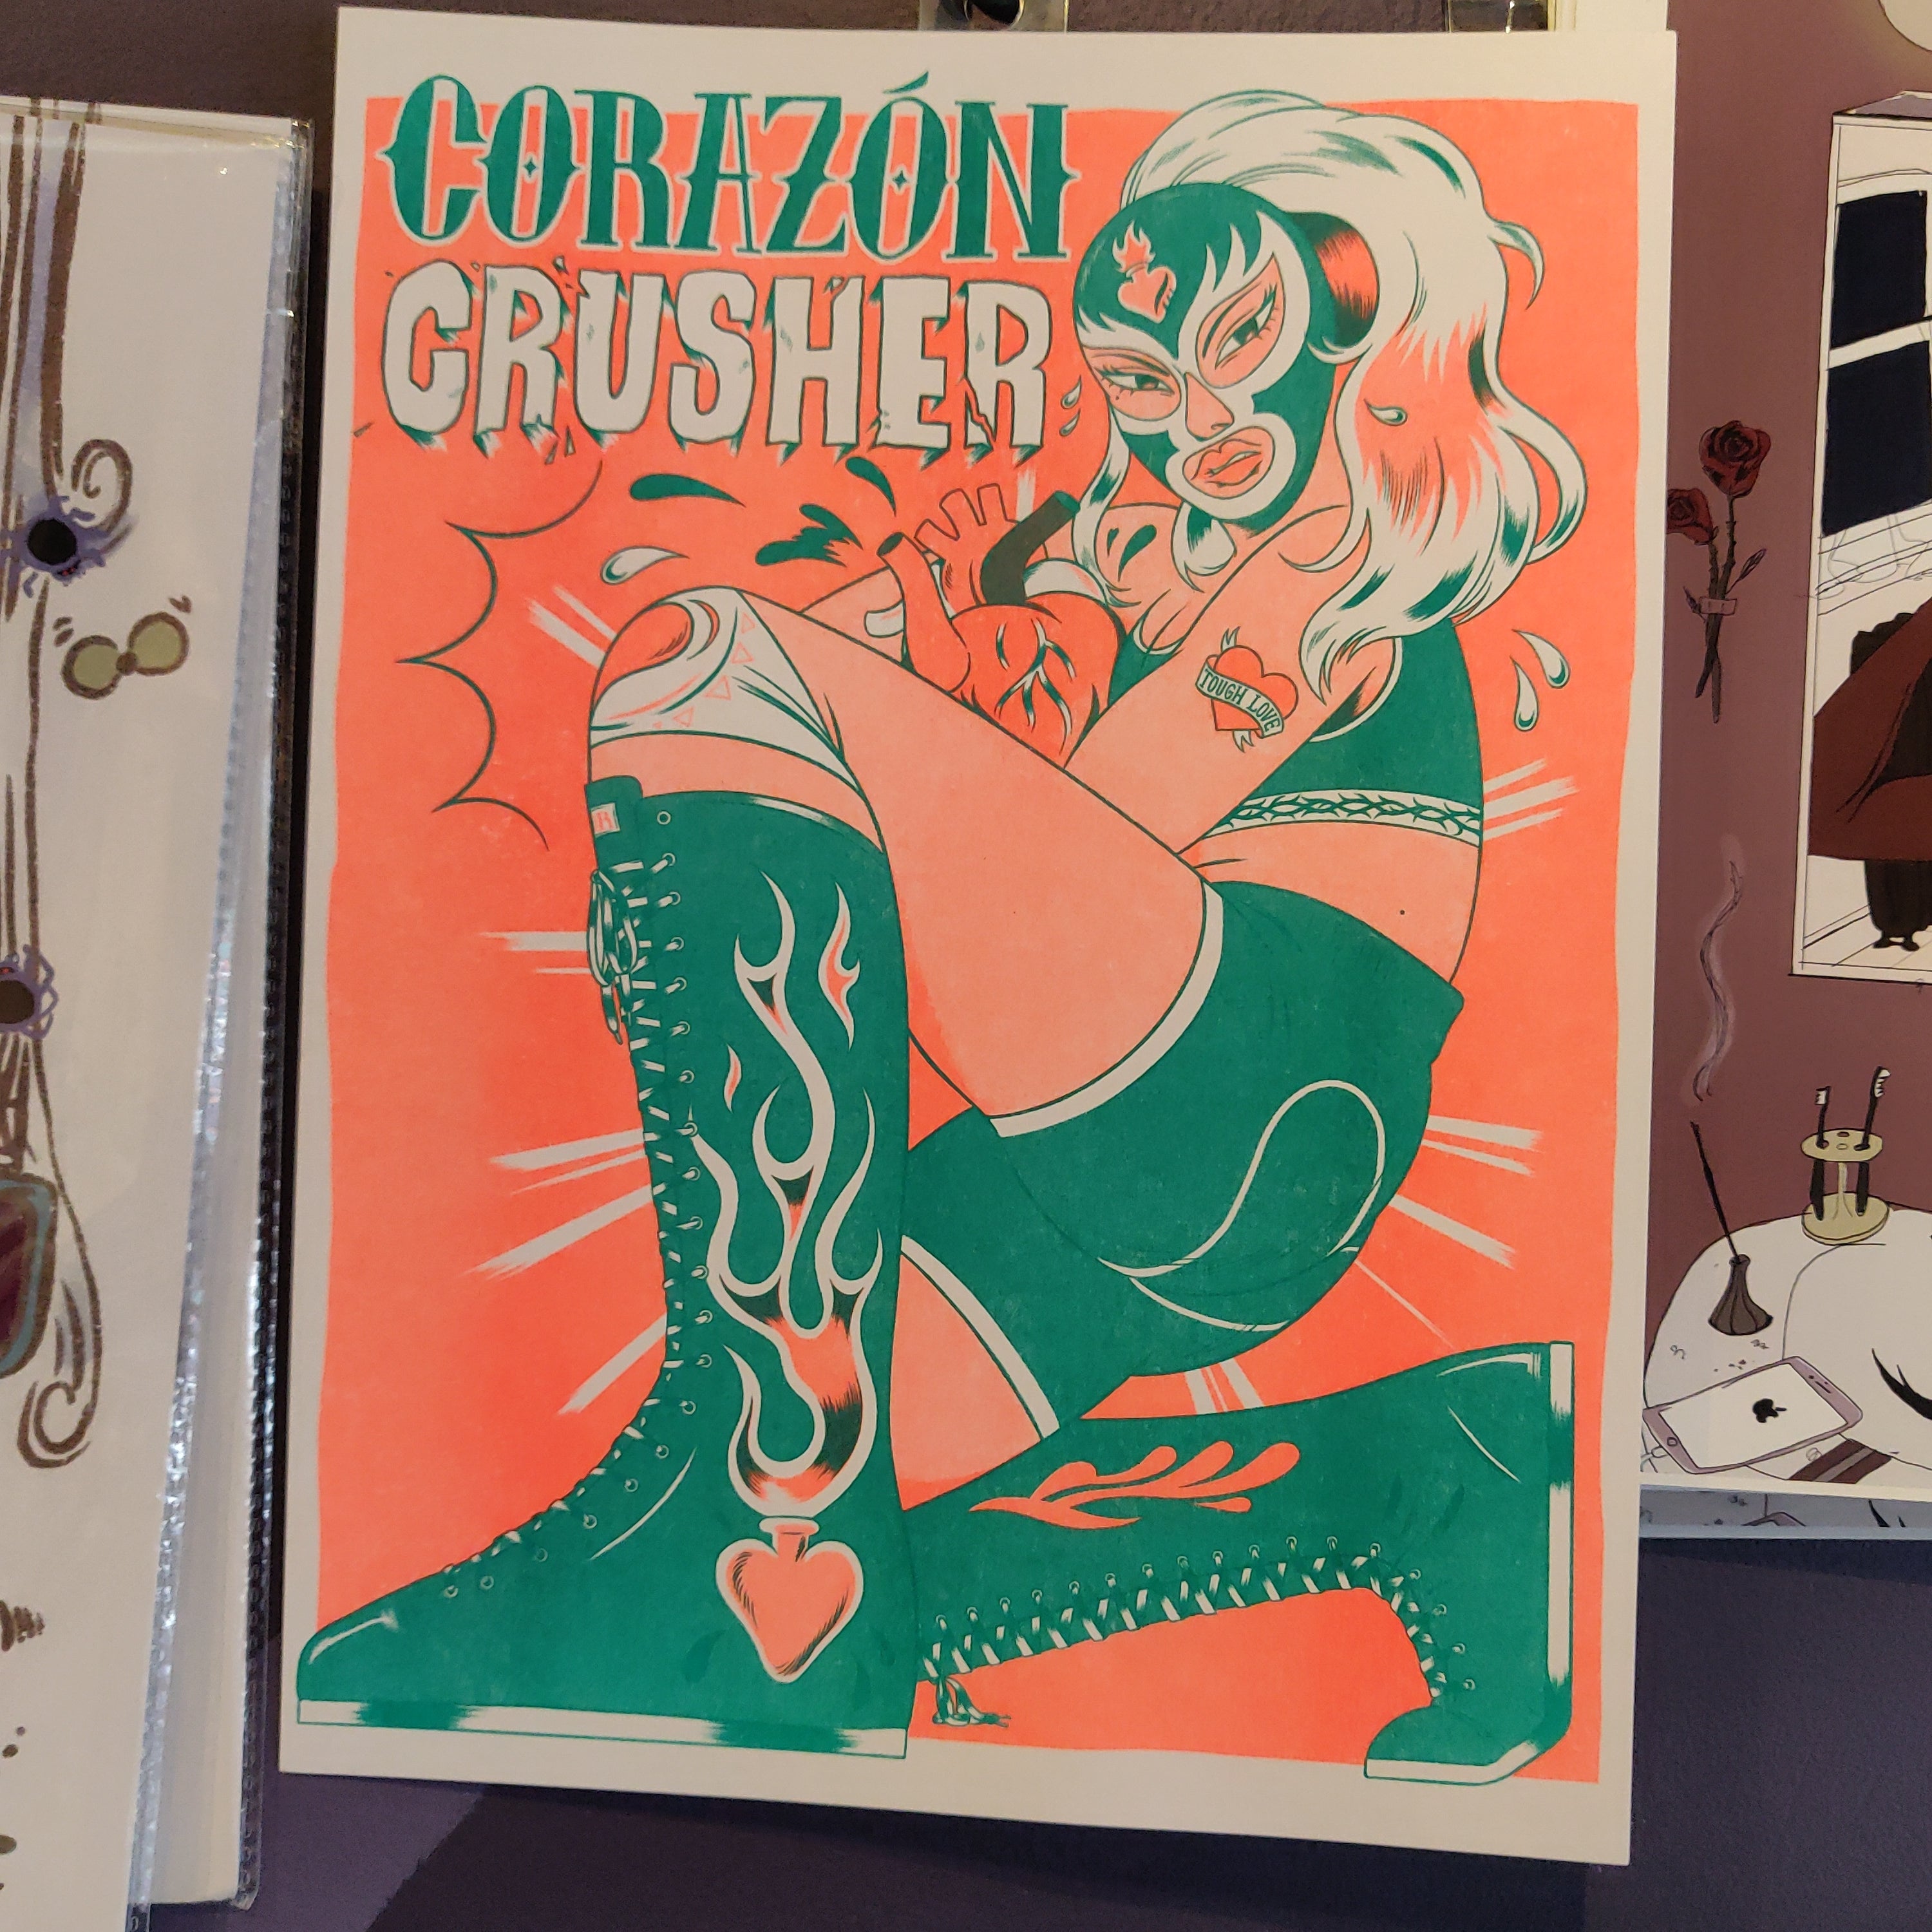 Corazon Crusher Riso PRiNT by Carmen Pizarro